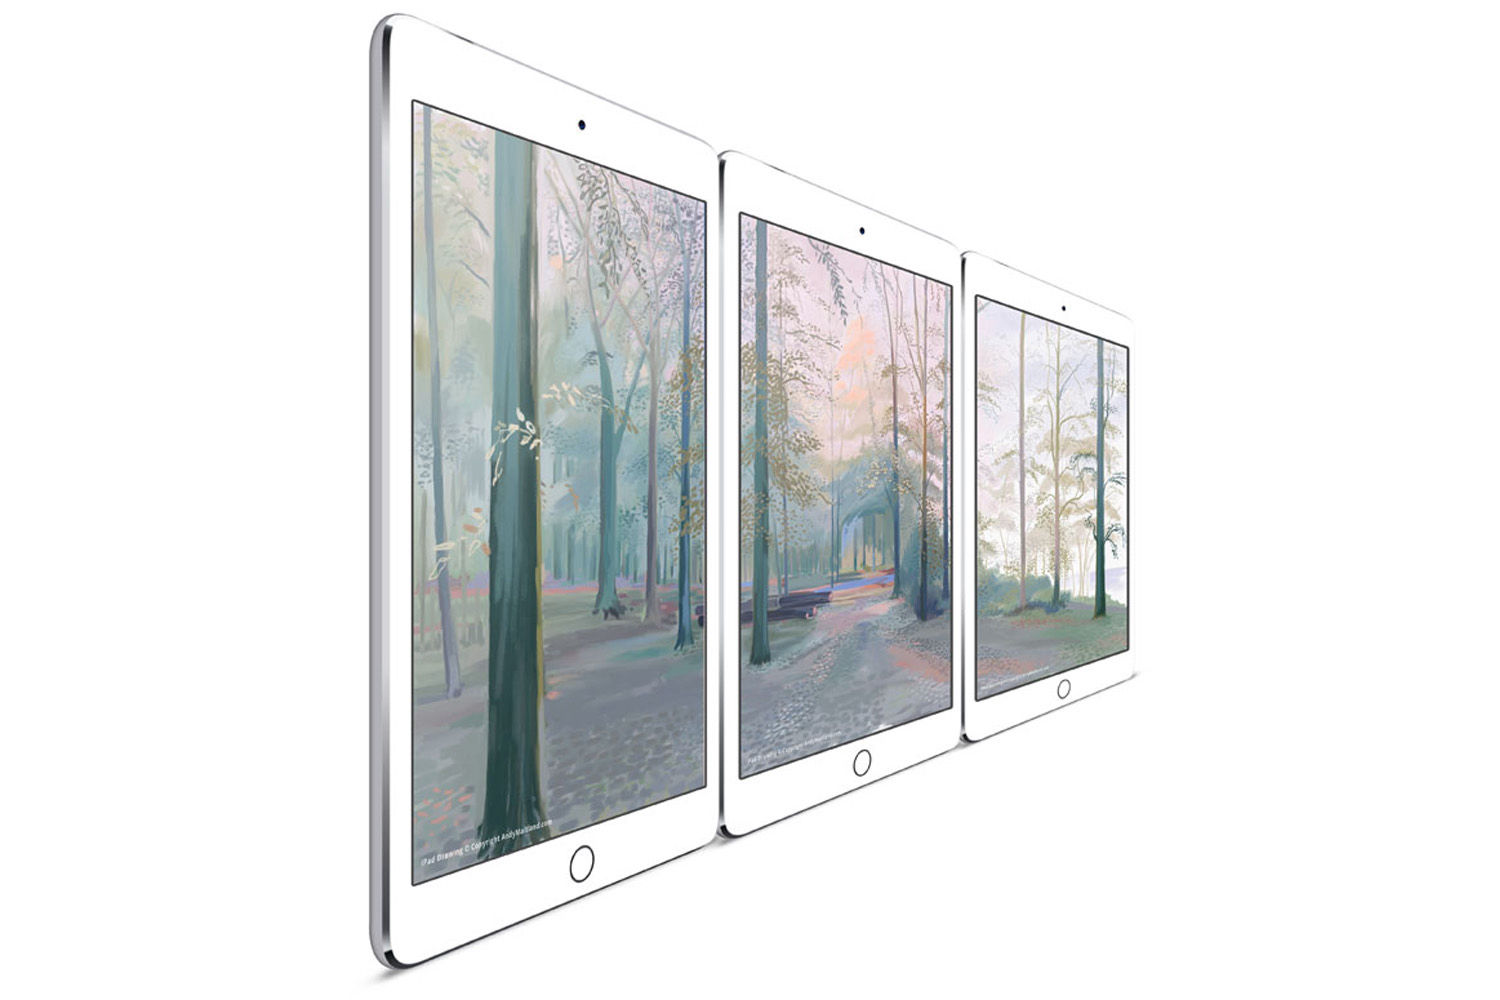 Morning Mist, iPad drawing created across three iPad canvases